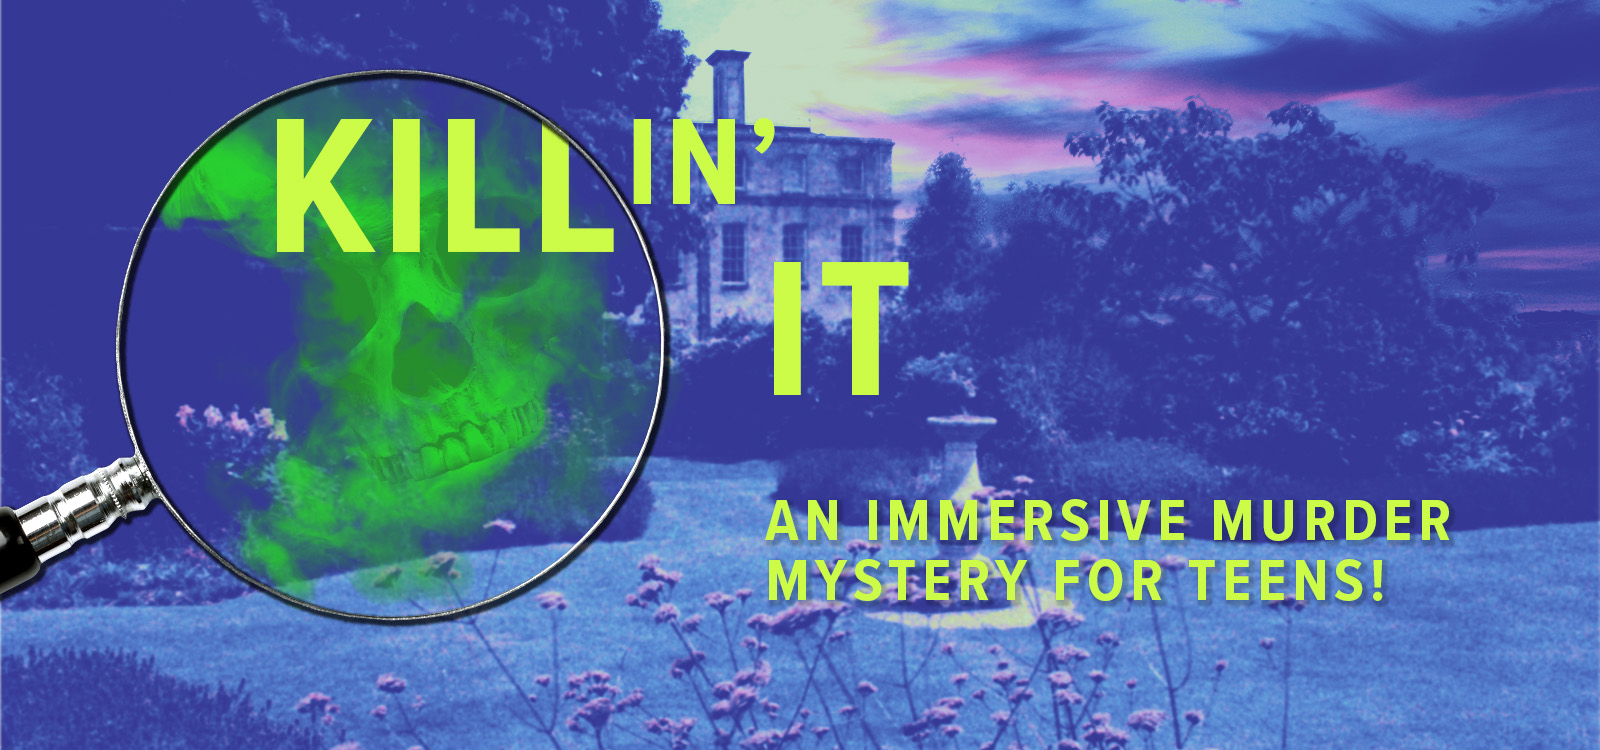 Killin' It: An immersive murder mystery for teens